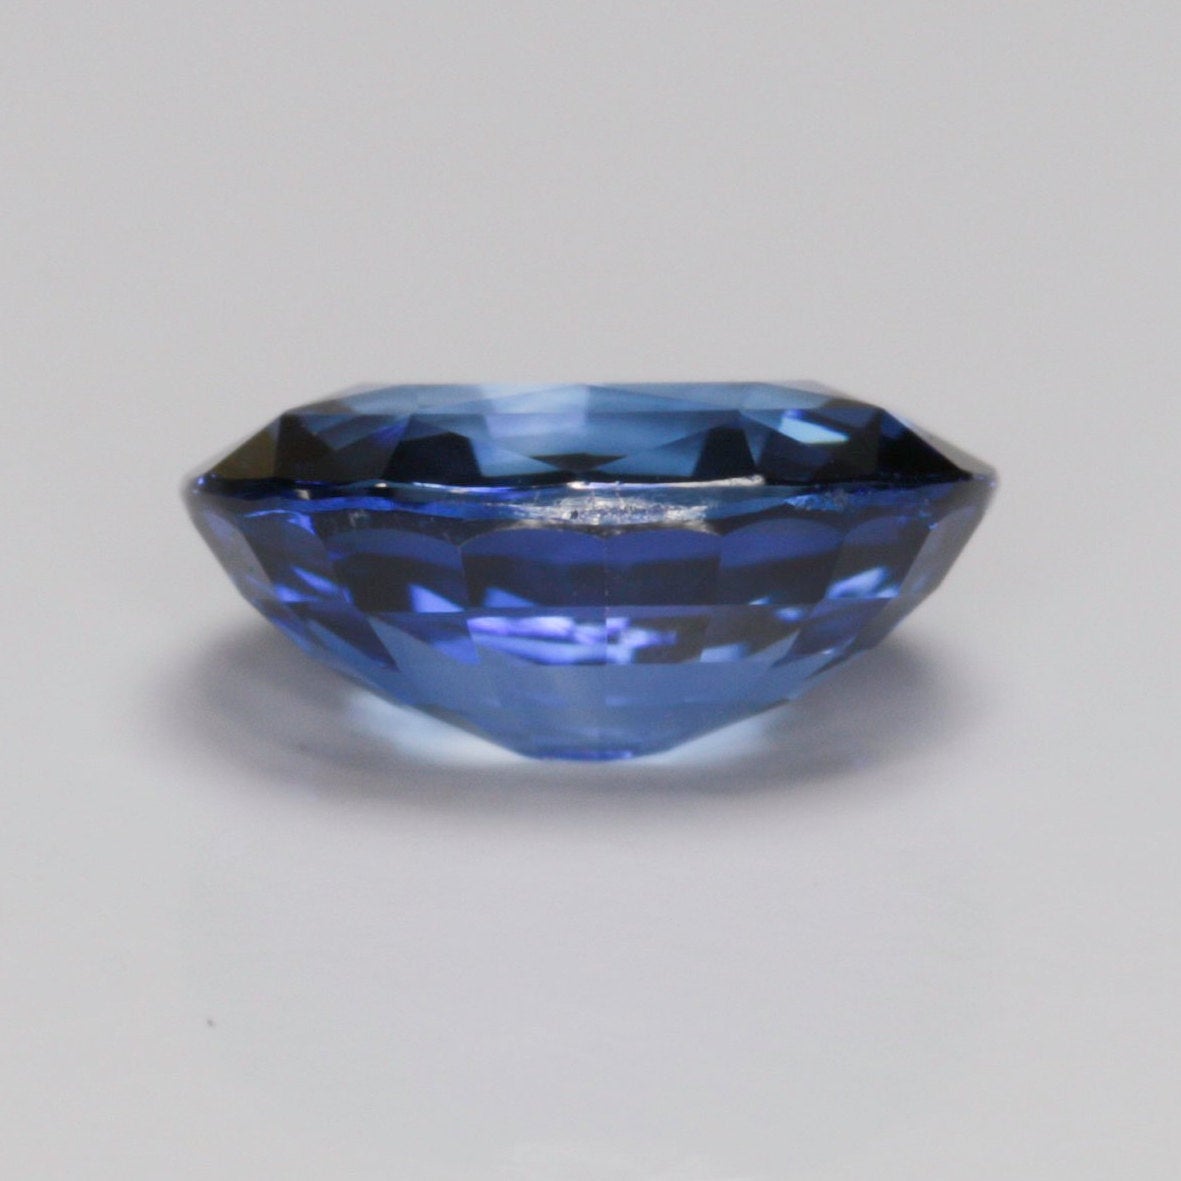 1.00 carat dark blue oval sapphire - custom work - inventory code: DBOS10 - Midwinter Co. Alternative Bridal Rings and Modern Fine Jewelry